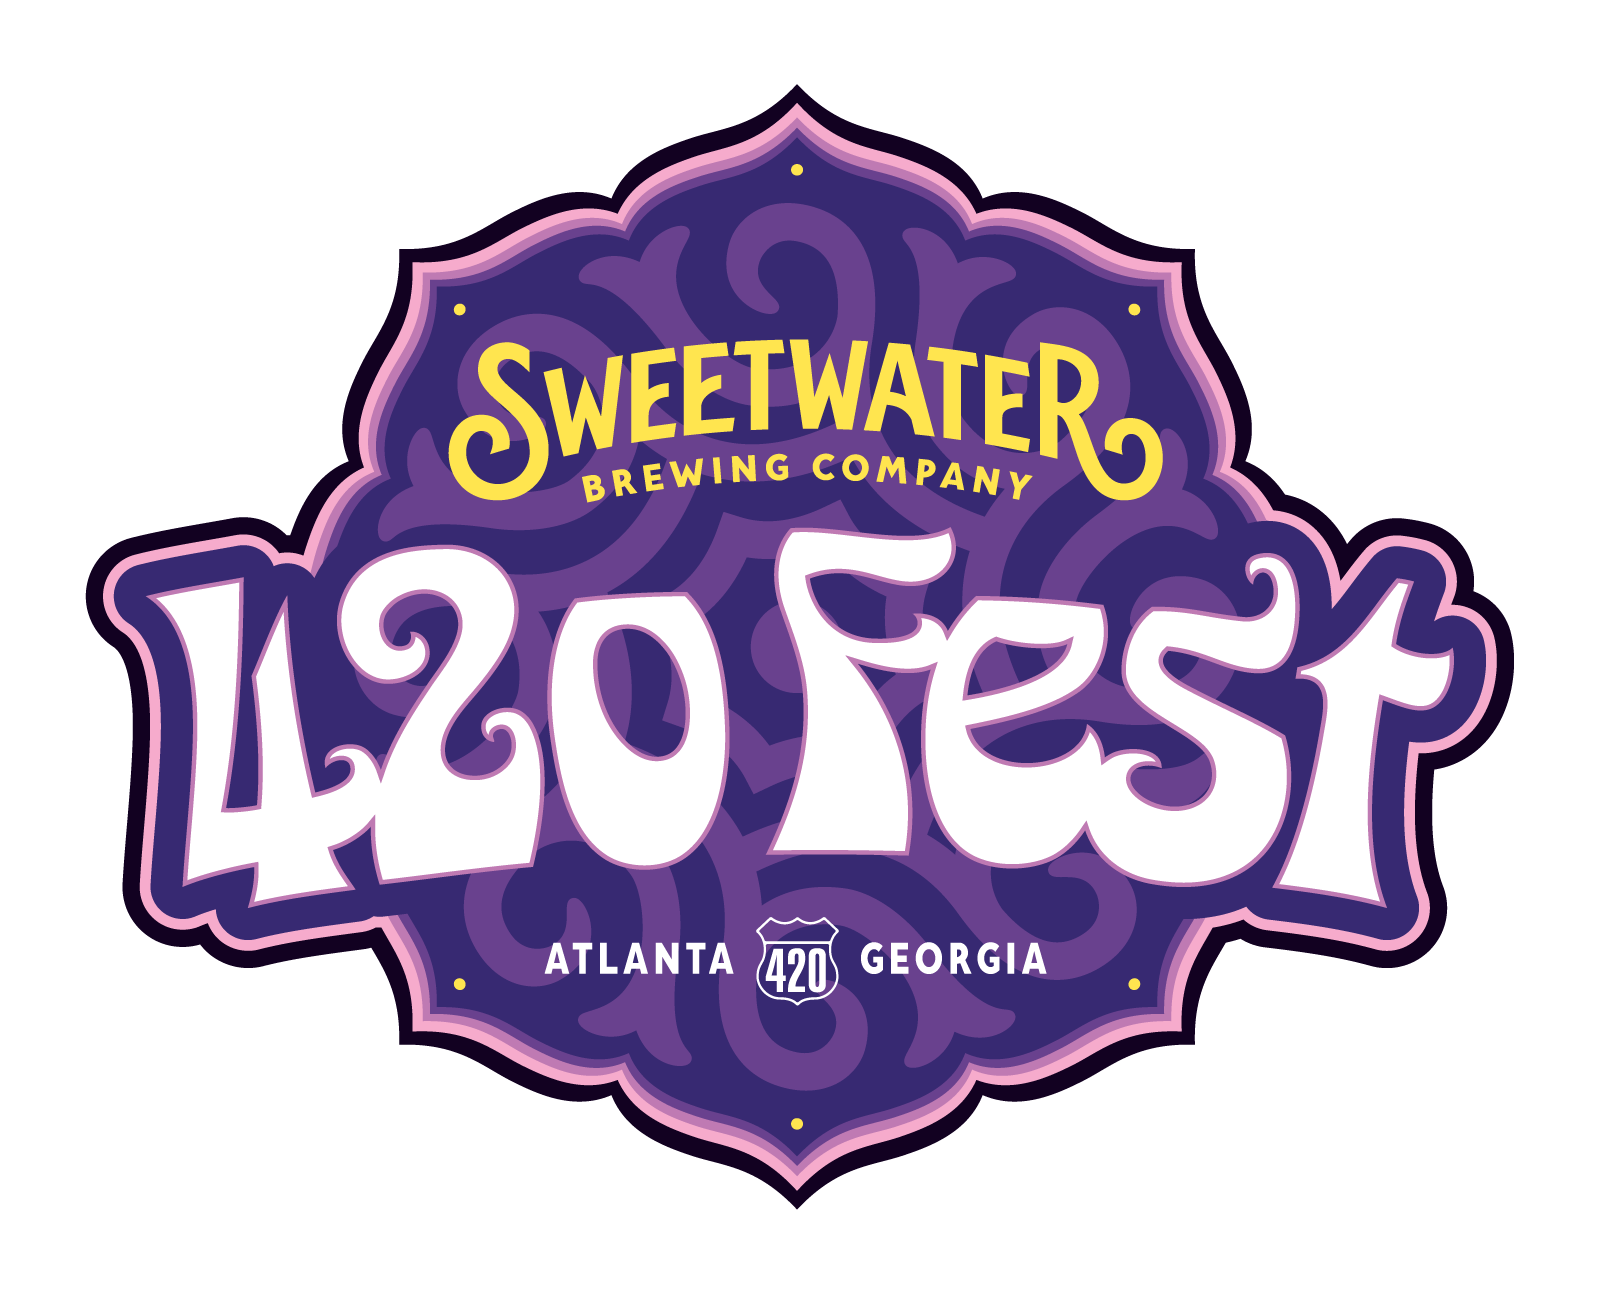 sweetwater420fest.com